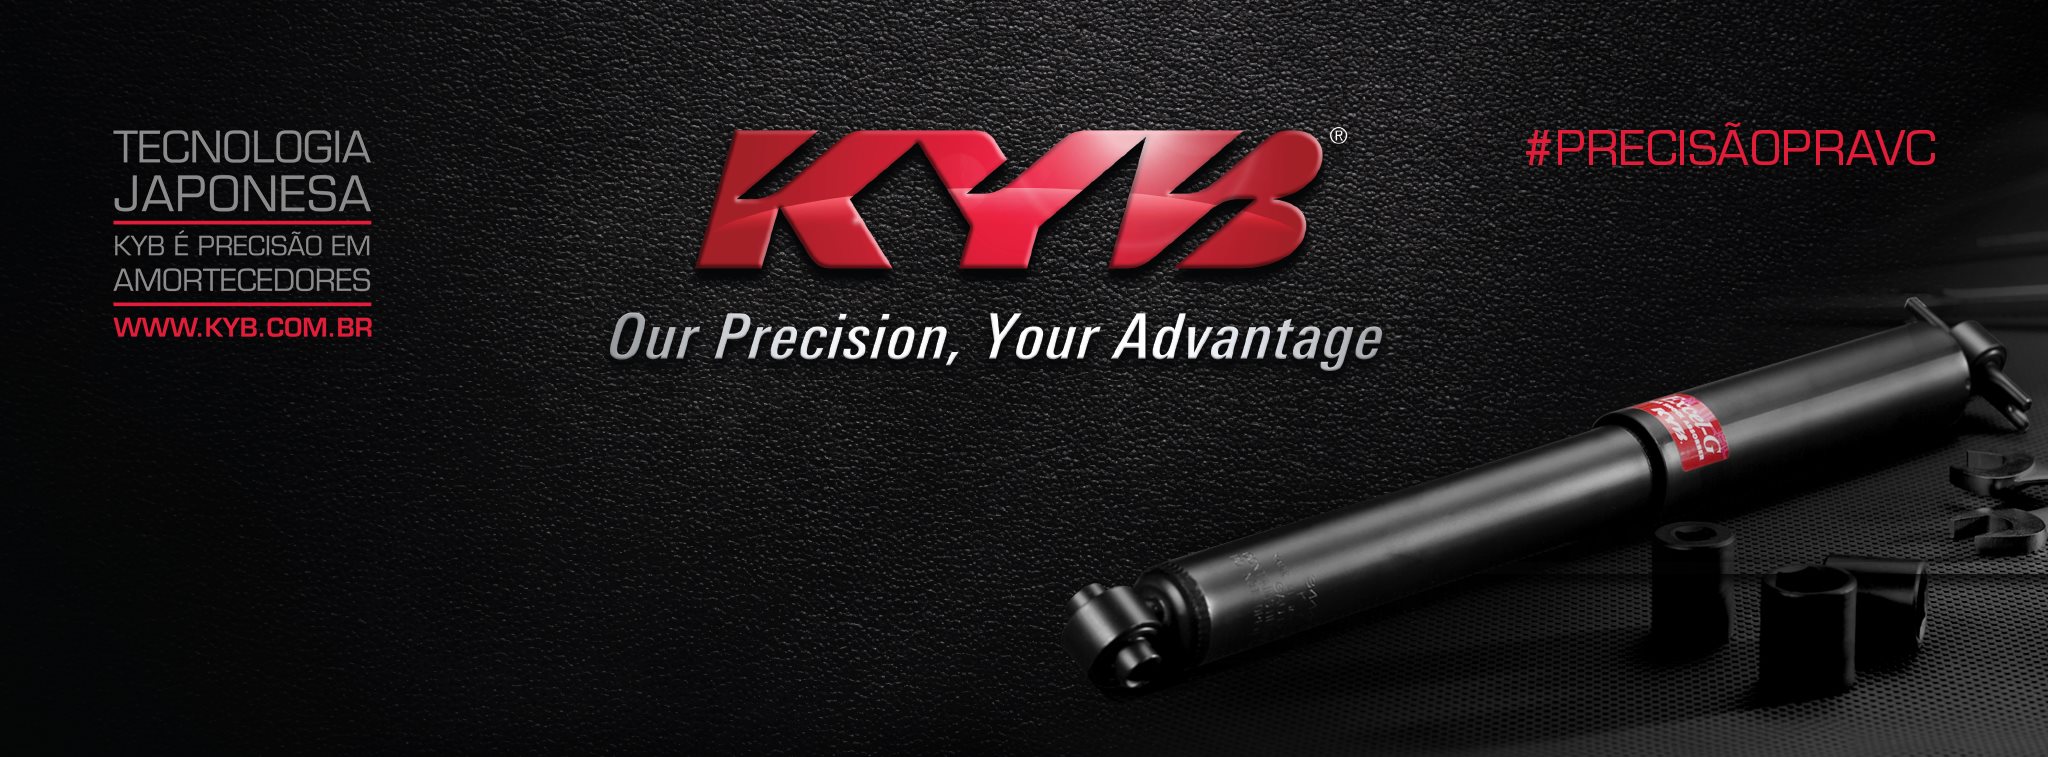 Срок службы стойки. KYB логотип. KYB баннер. KYB надпись. KYB реклама.